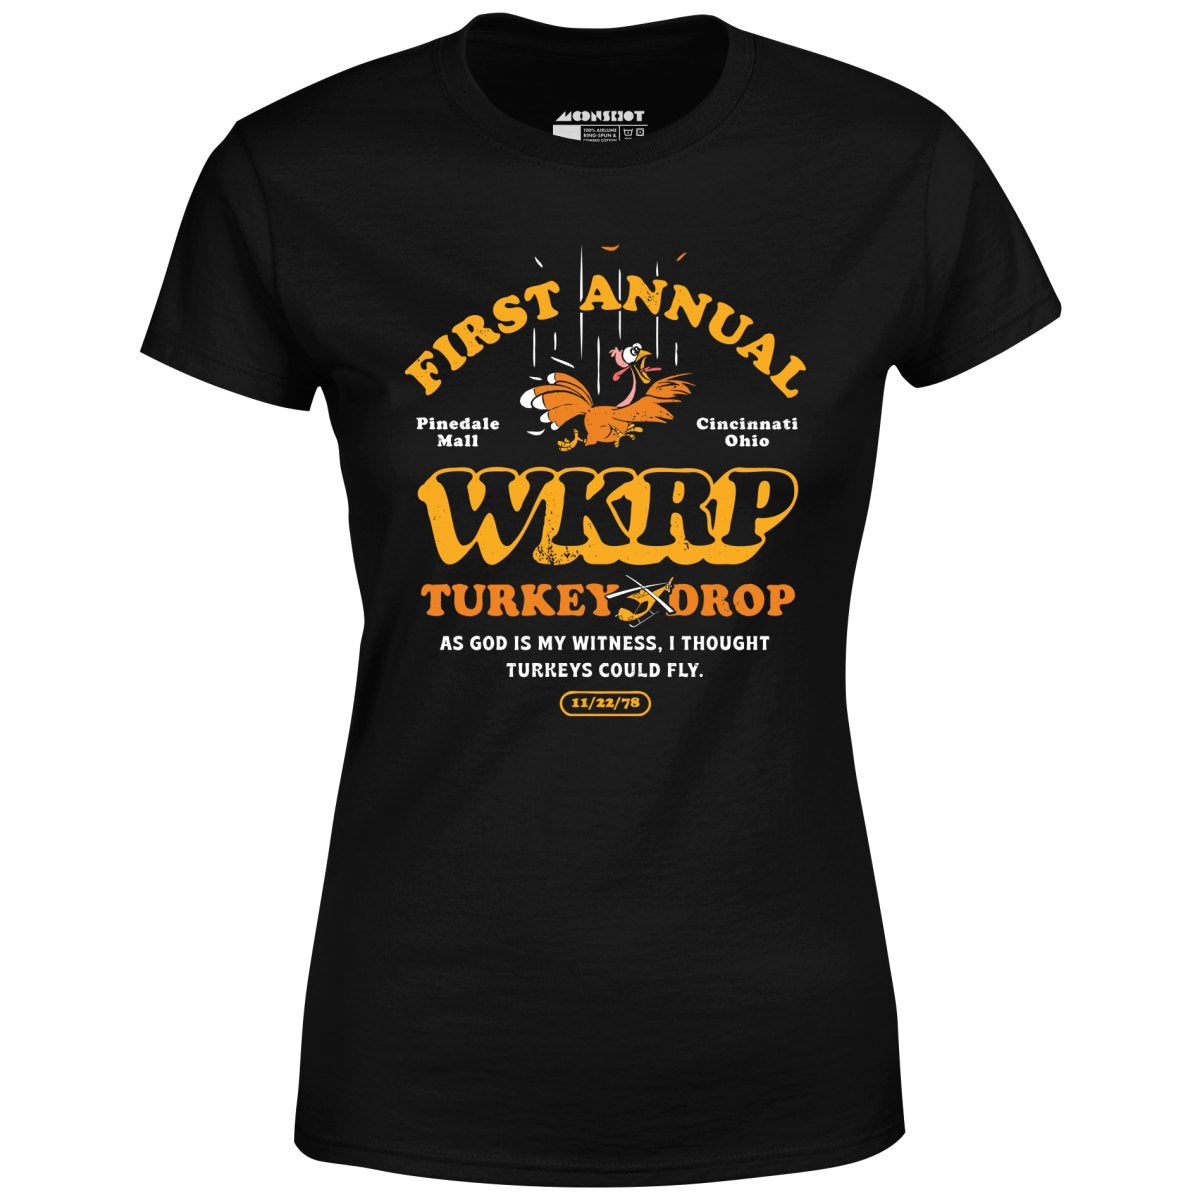 WKRP Turkey Drop - Women's T-Shirt